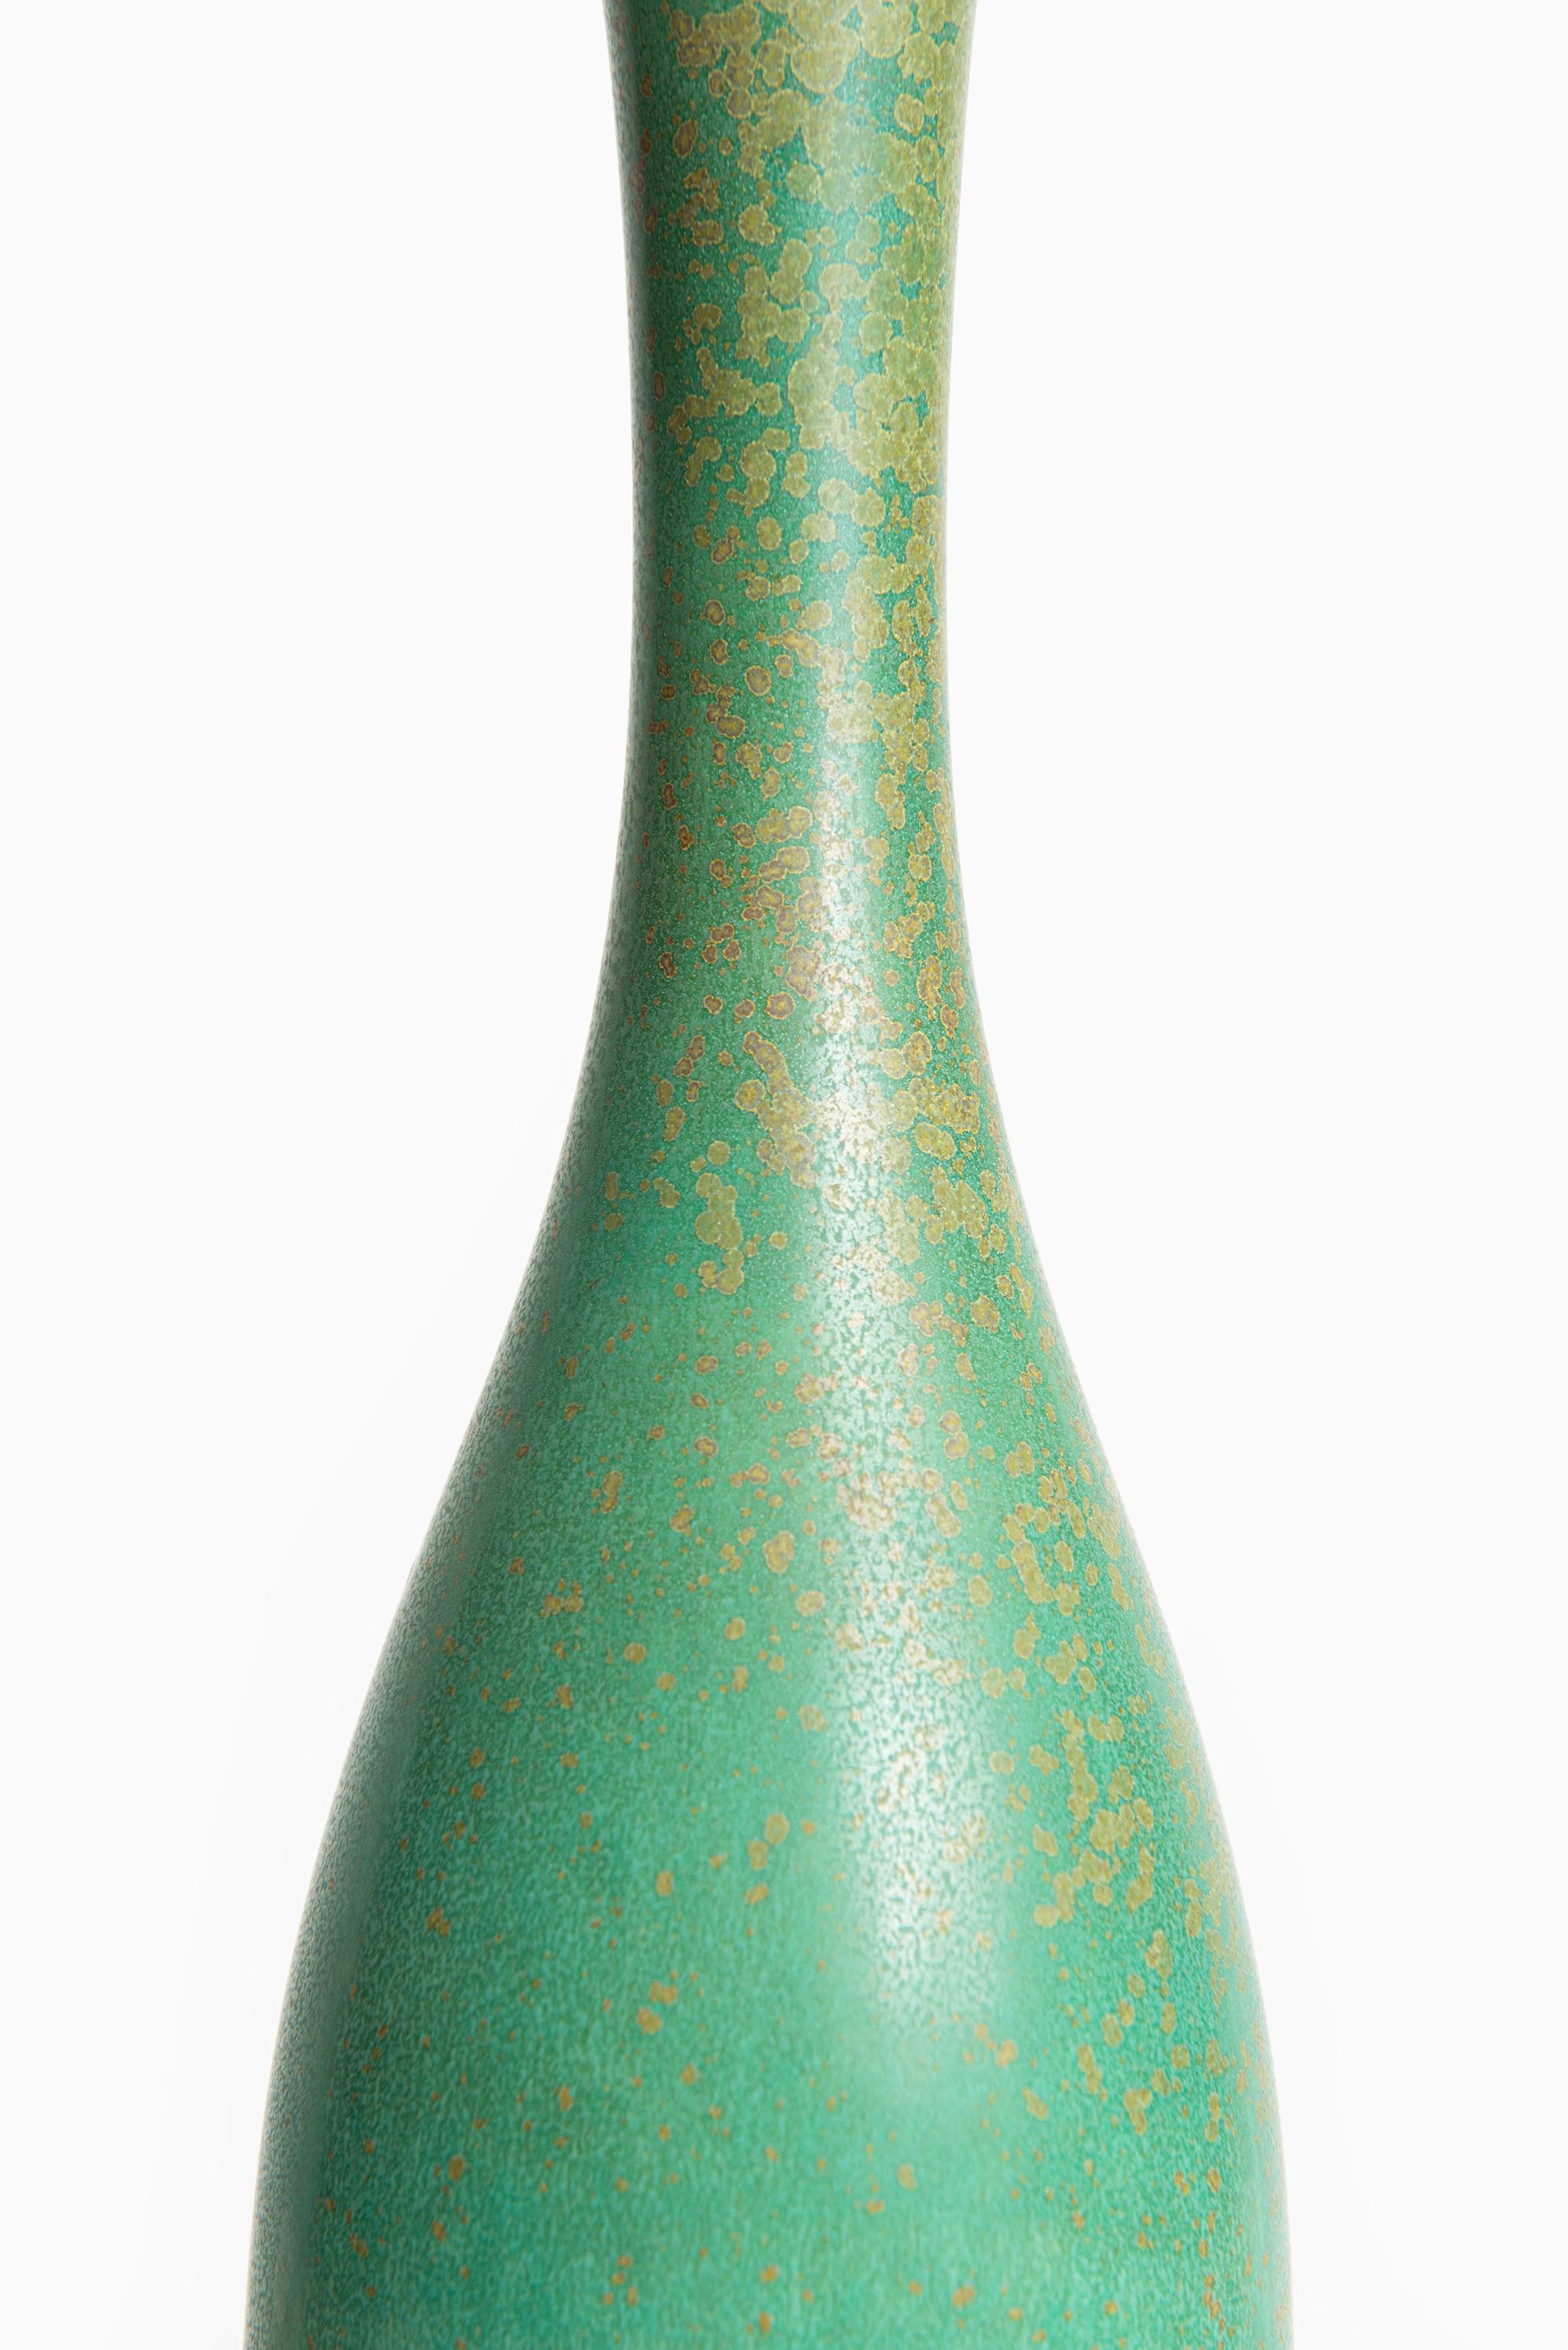 Scandinavian Modern Carl-Harry Stålhane Tall Ceramic Vase by Rörstrand in Sweden